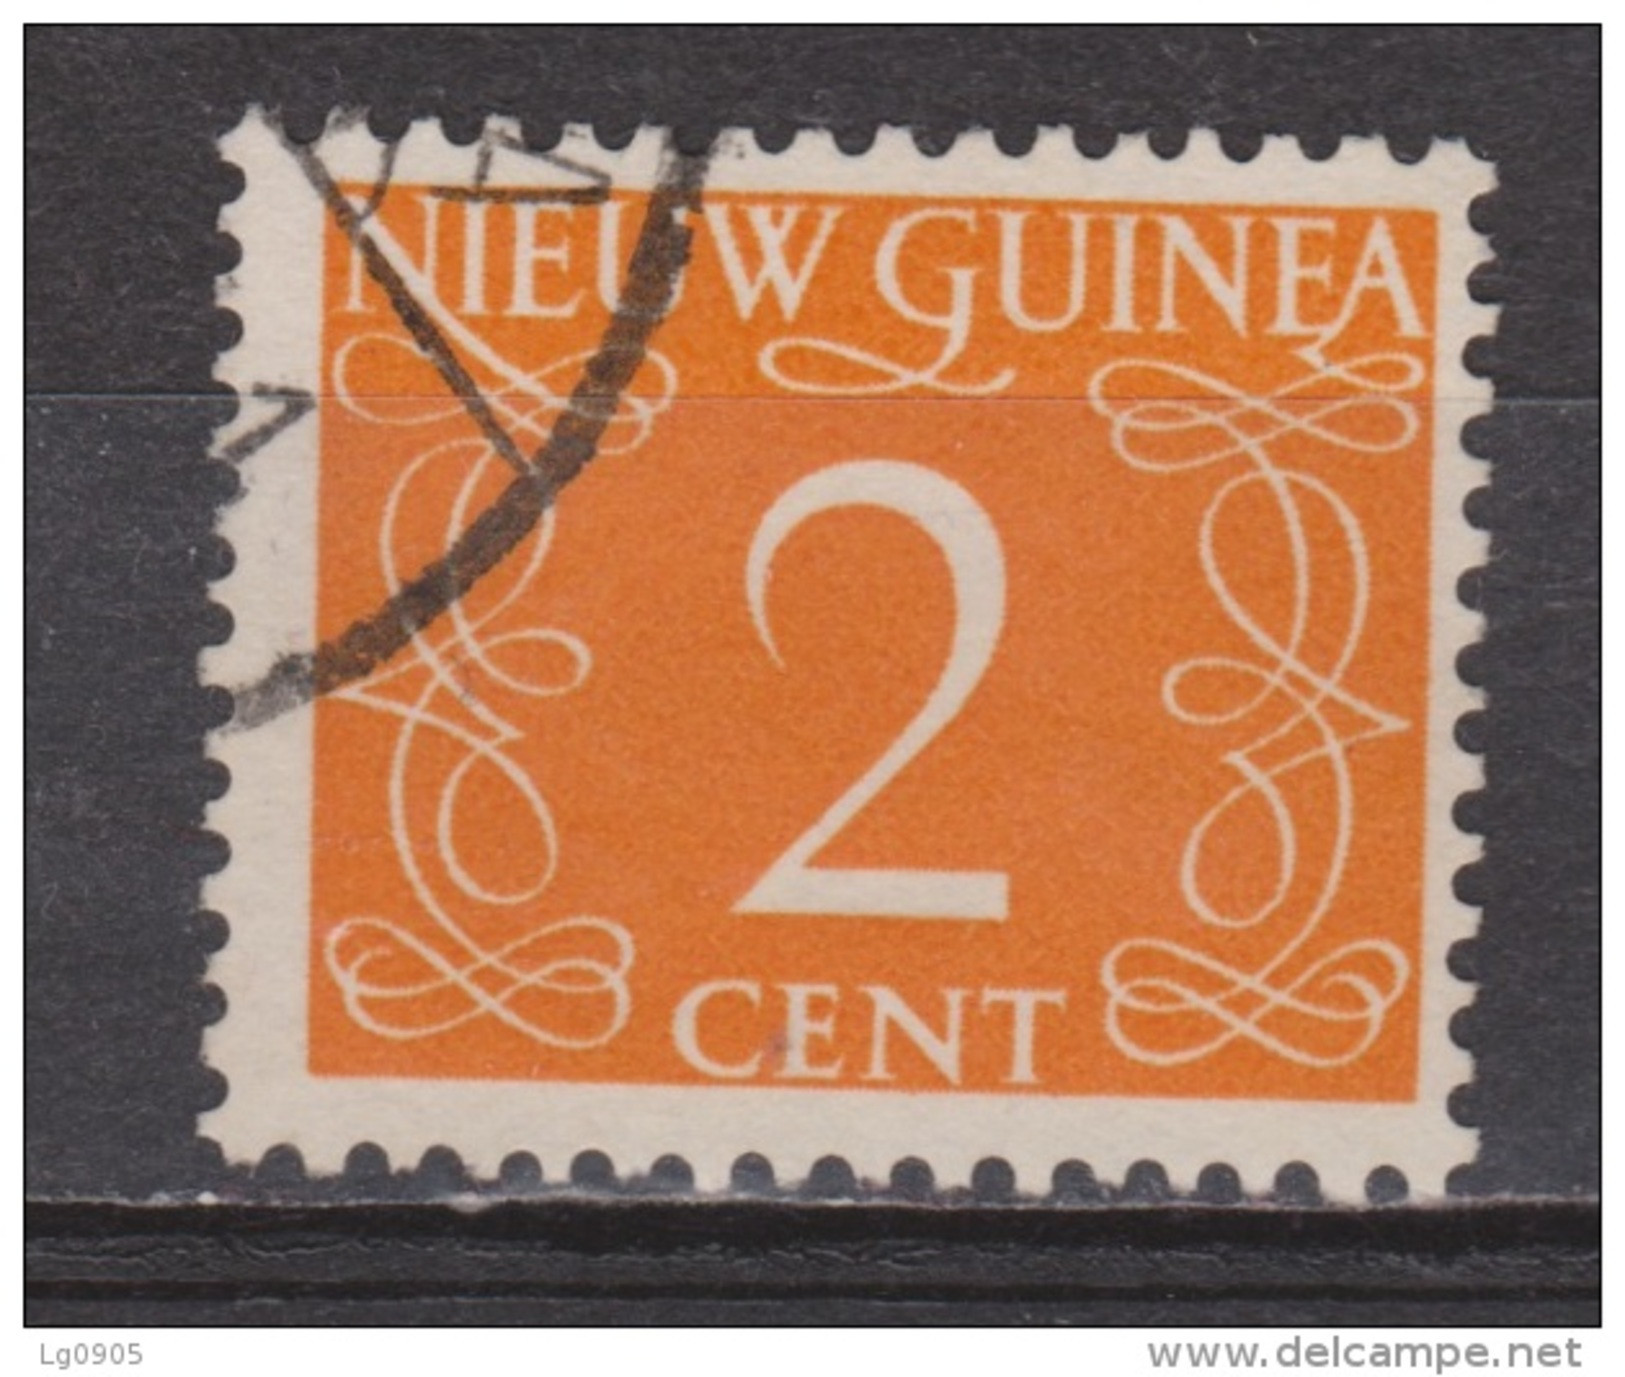 Nederlands Nieuw Guinea 2 Used ; Cijfer 1950 ; NOW ALL STAMPS OF NETHERLANDS NEW GUINEA - Nueva Guinea Holandesa